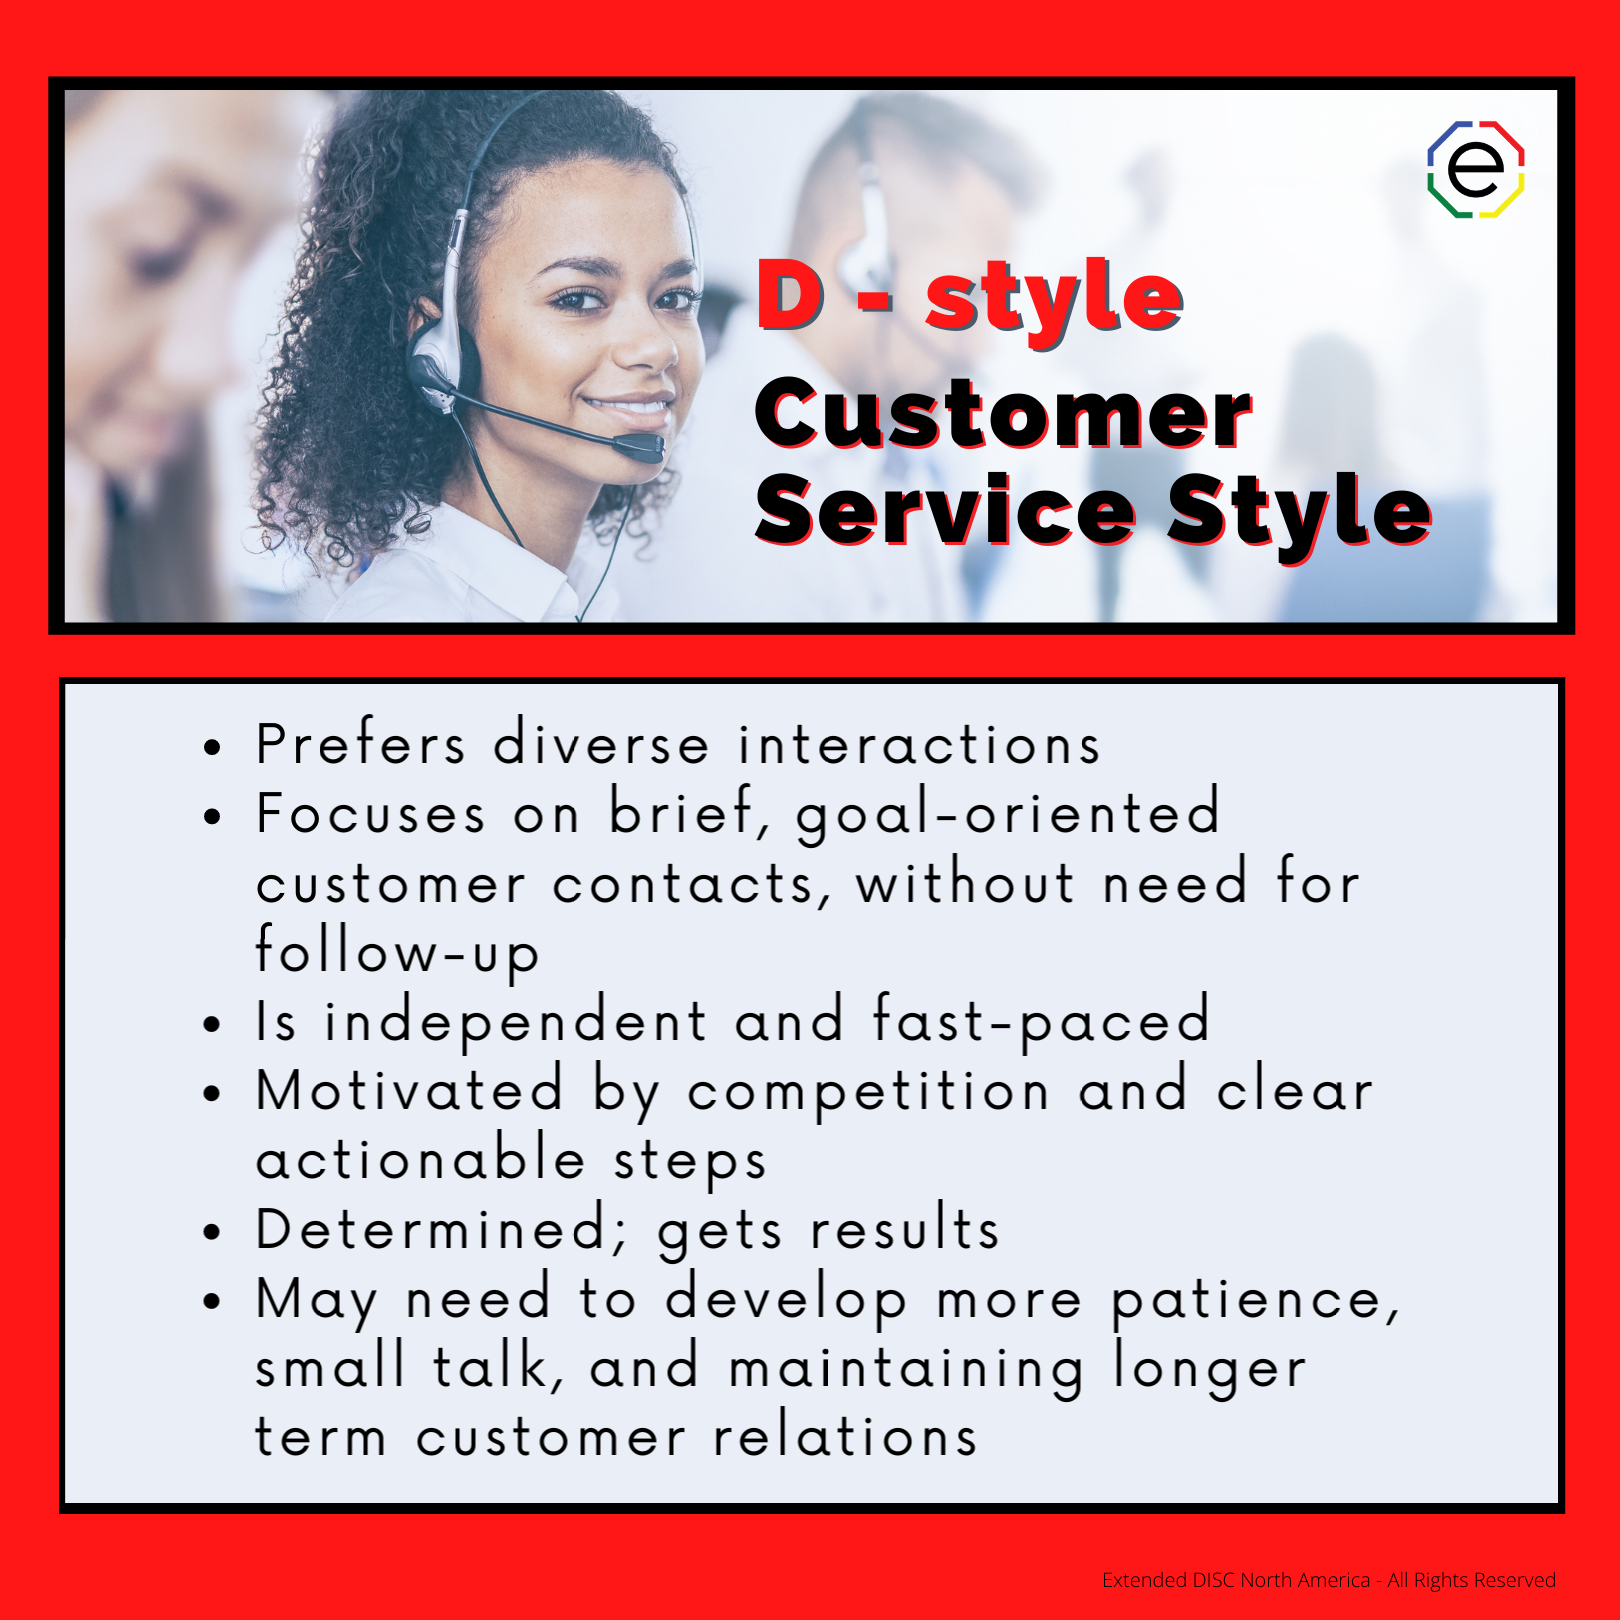 D-style Customer Service Styles